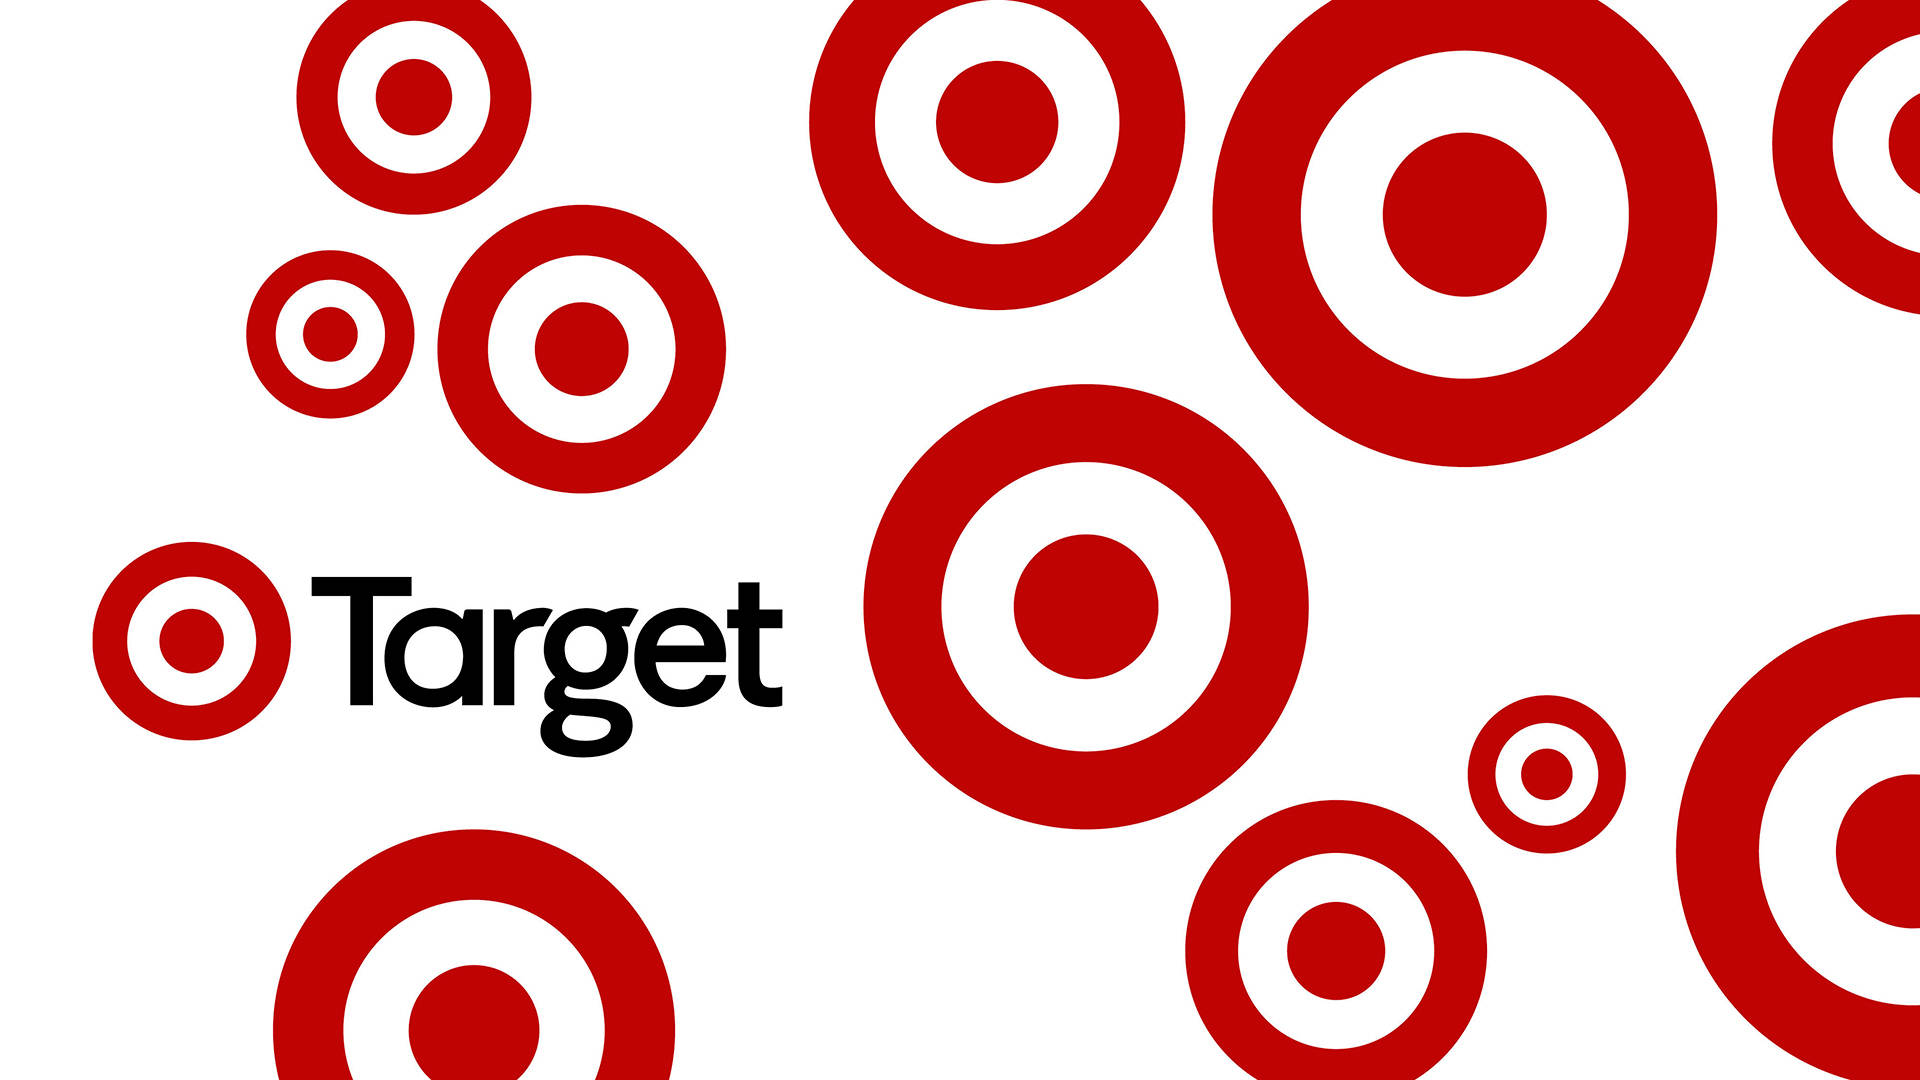 Target Retail Brand Poster Background